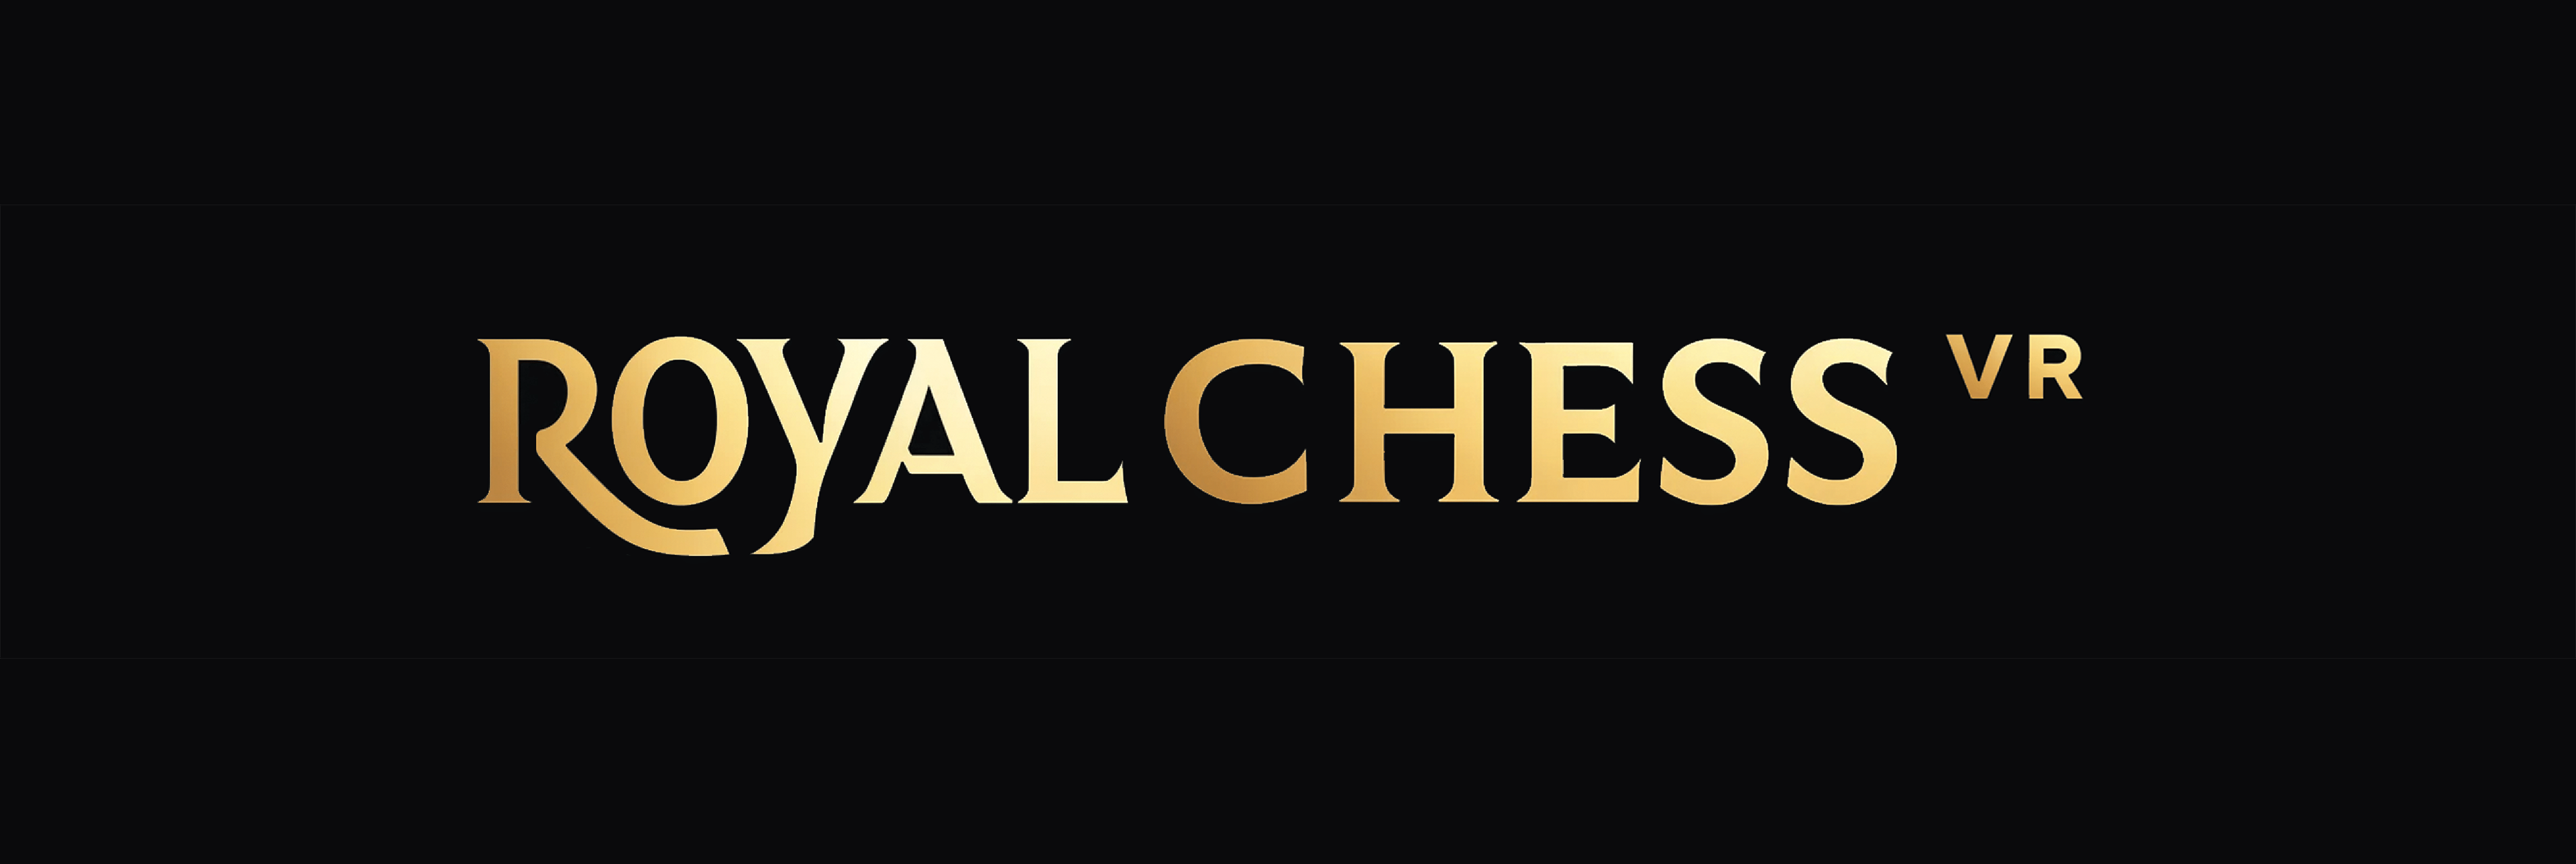 Royal Chess VR